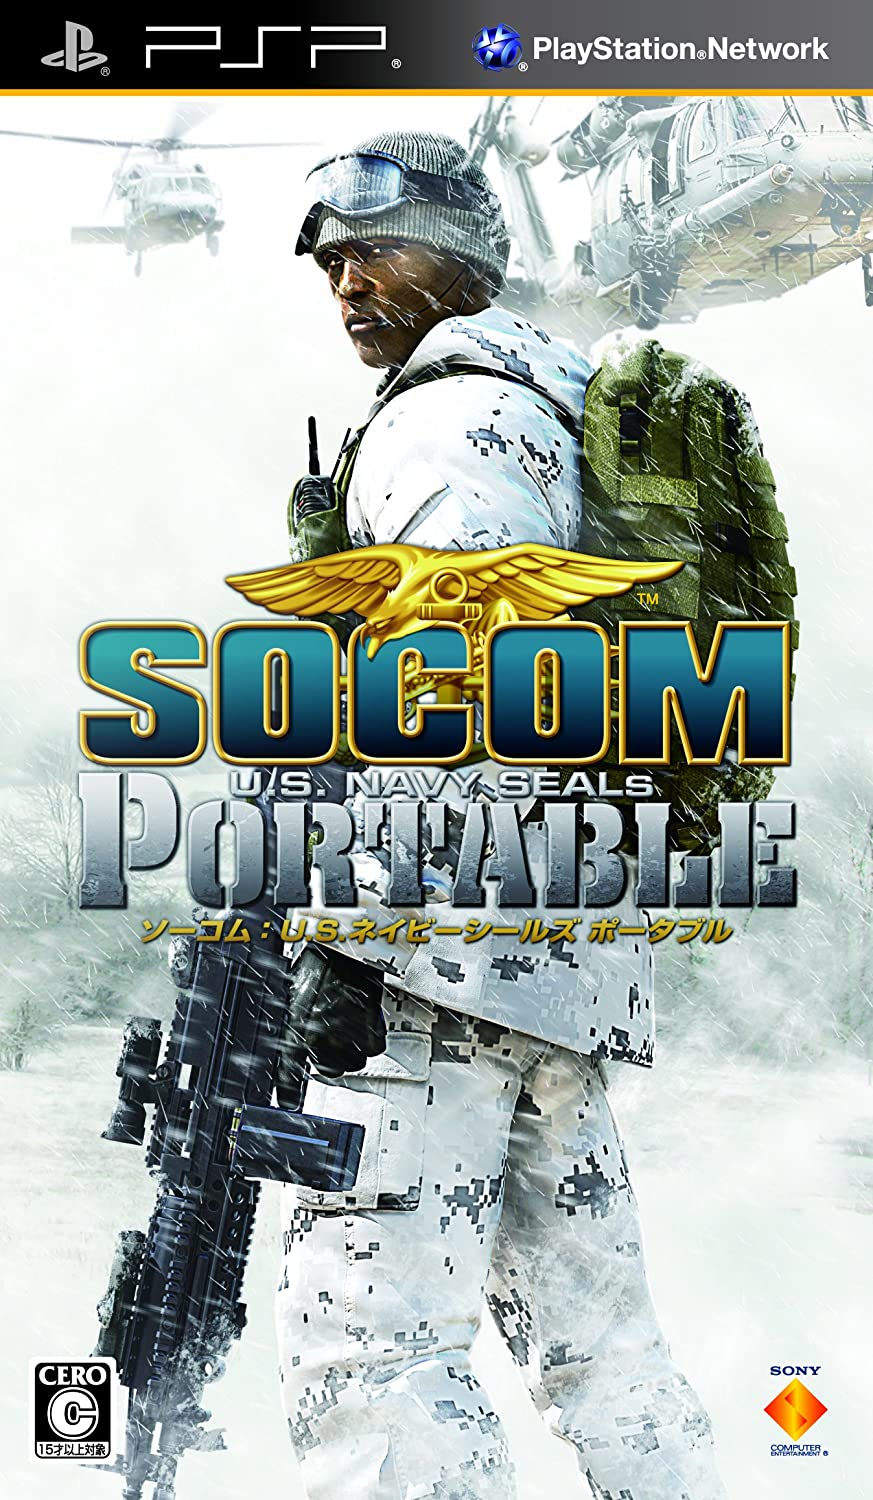 Socom U.S. Navy Seals Fireteam Bravo - Sony PlayStation Portable PSP -  Empty Custom Replacement Case - Custom Game Case